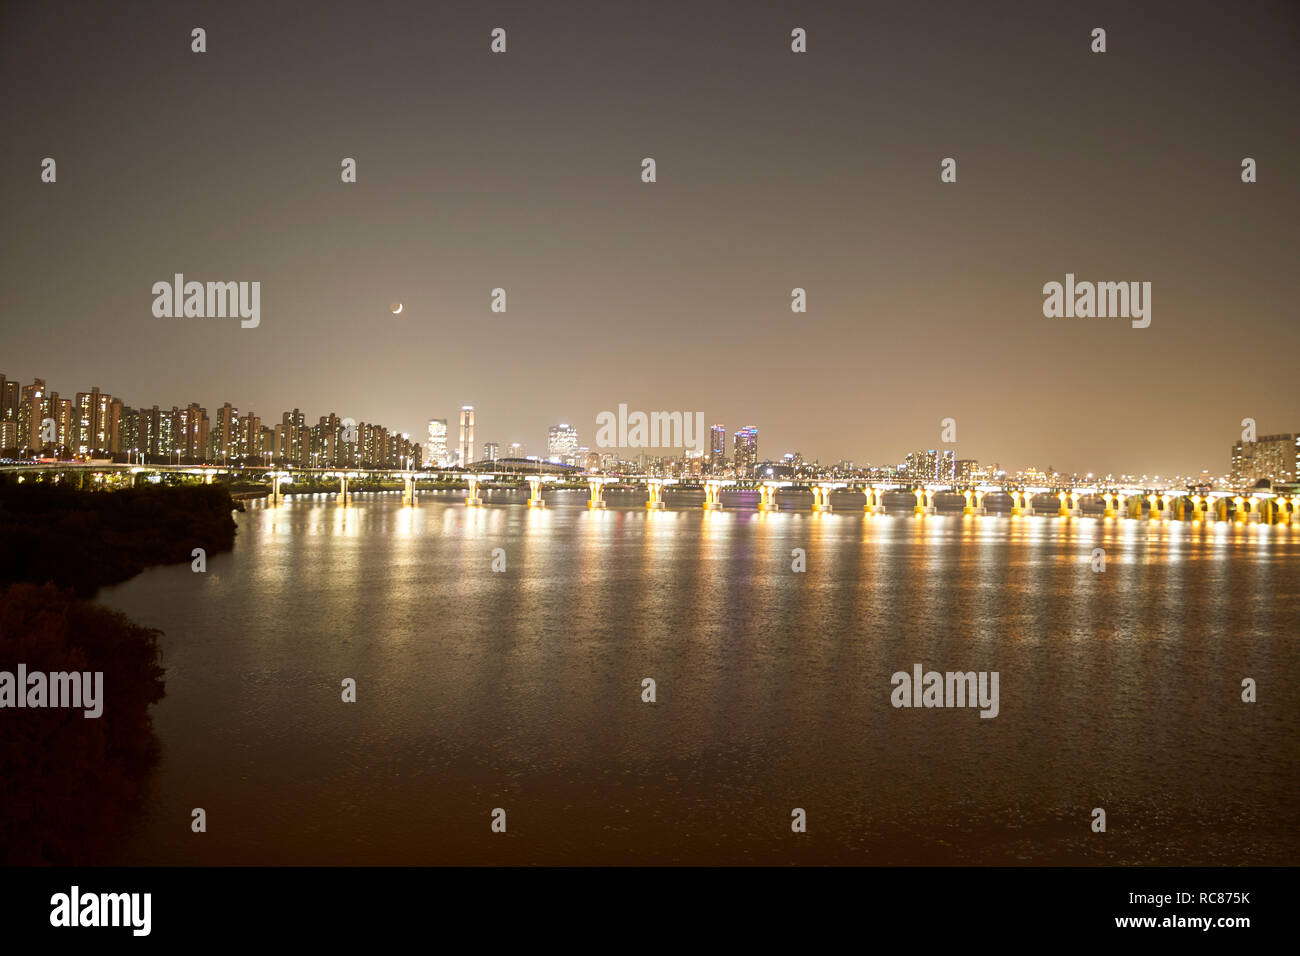 Illumination of Banpo Bridge reflected in water, Han River, Seoul, South Korea Stock Photo